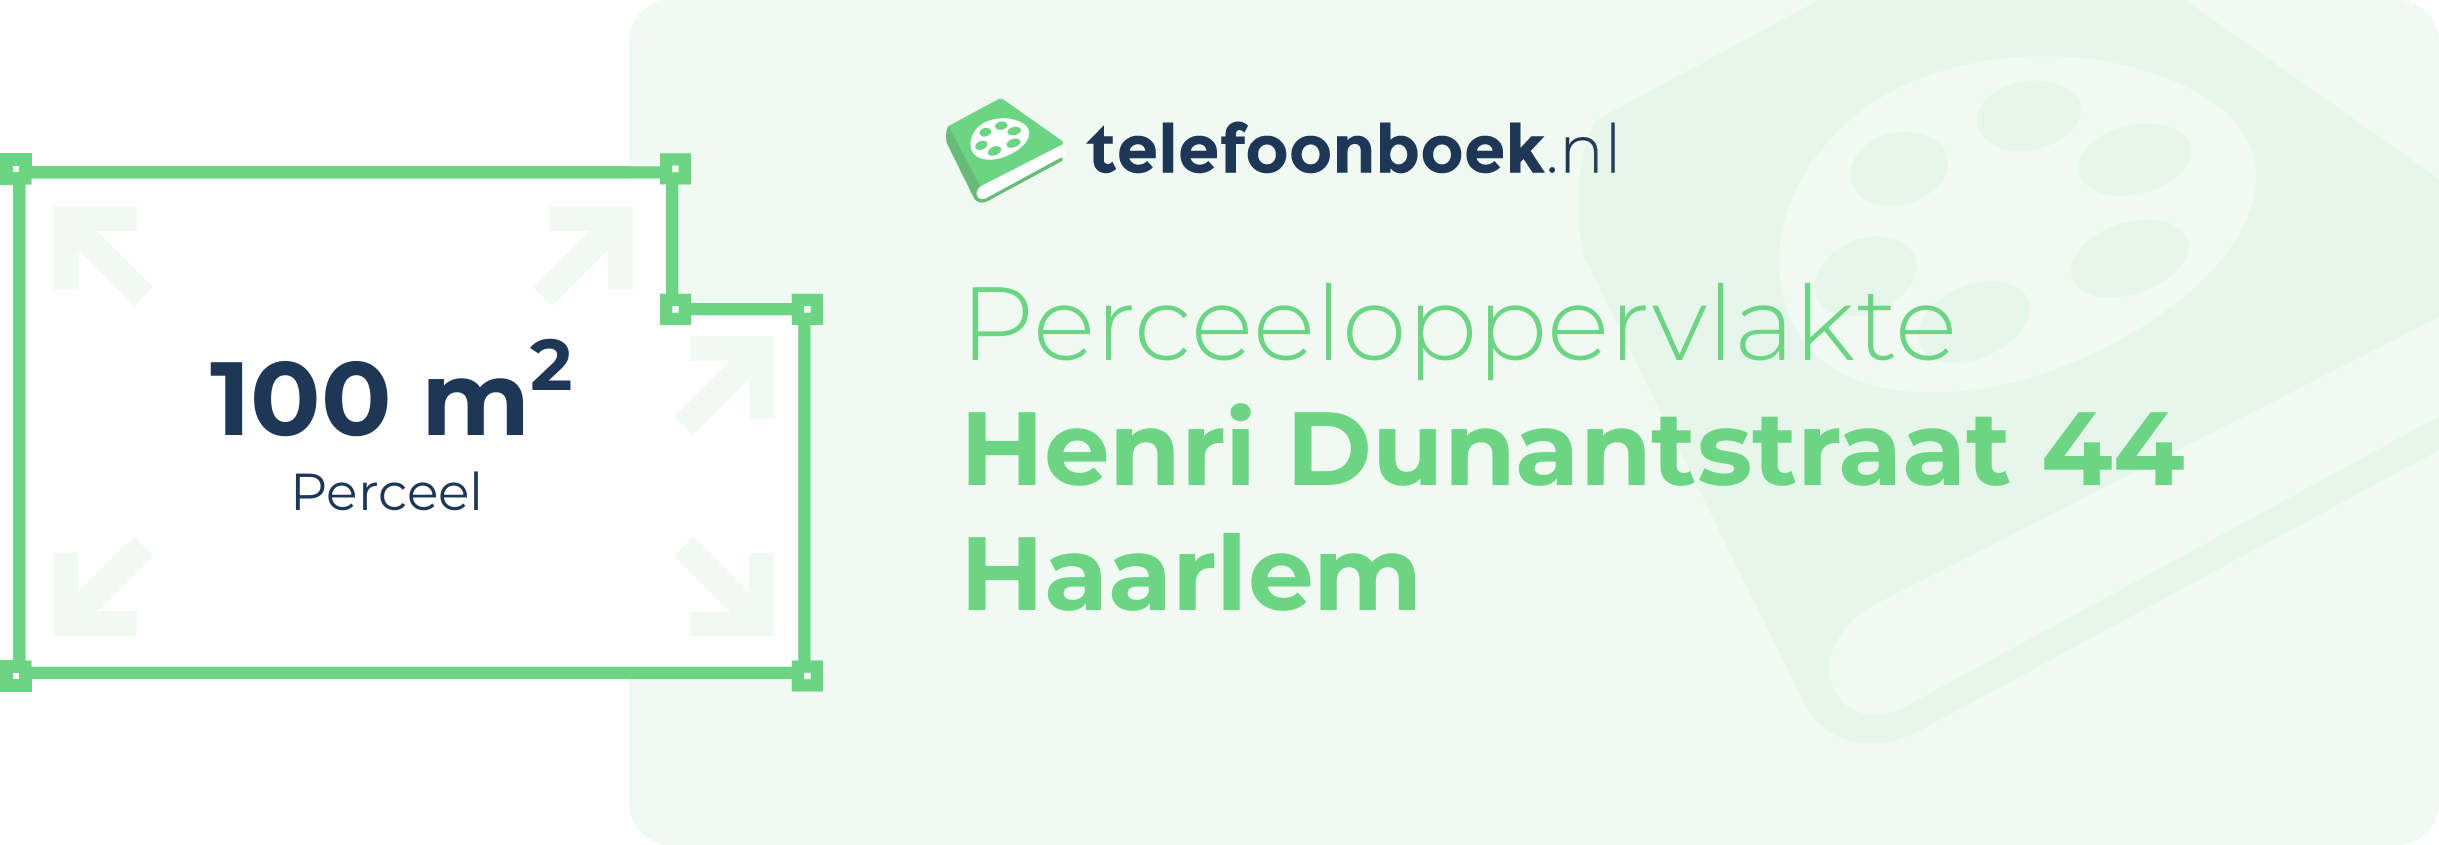 Perceeloppervlakte Henri Dunantstraat 44 Haarlem